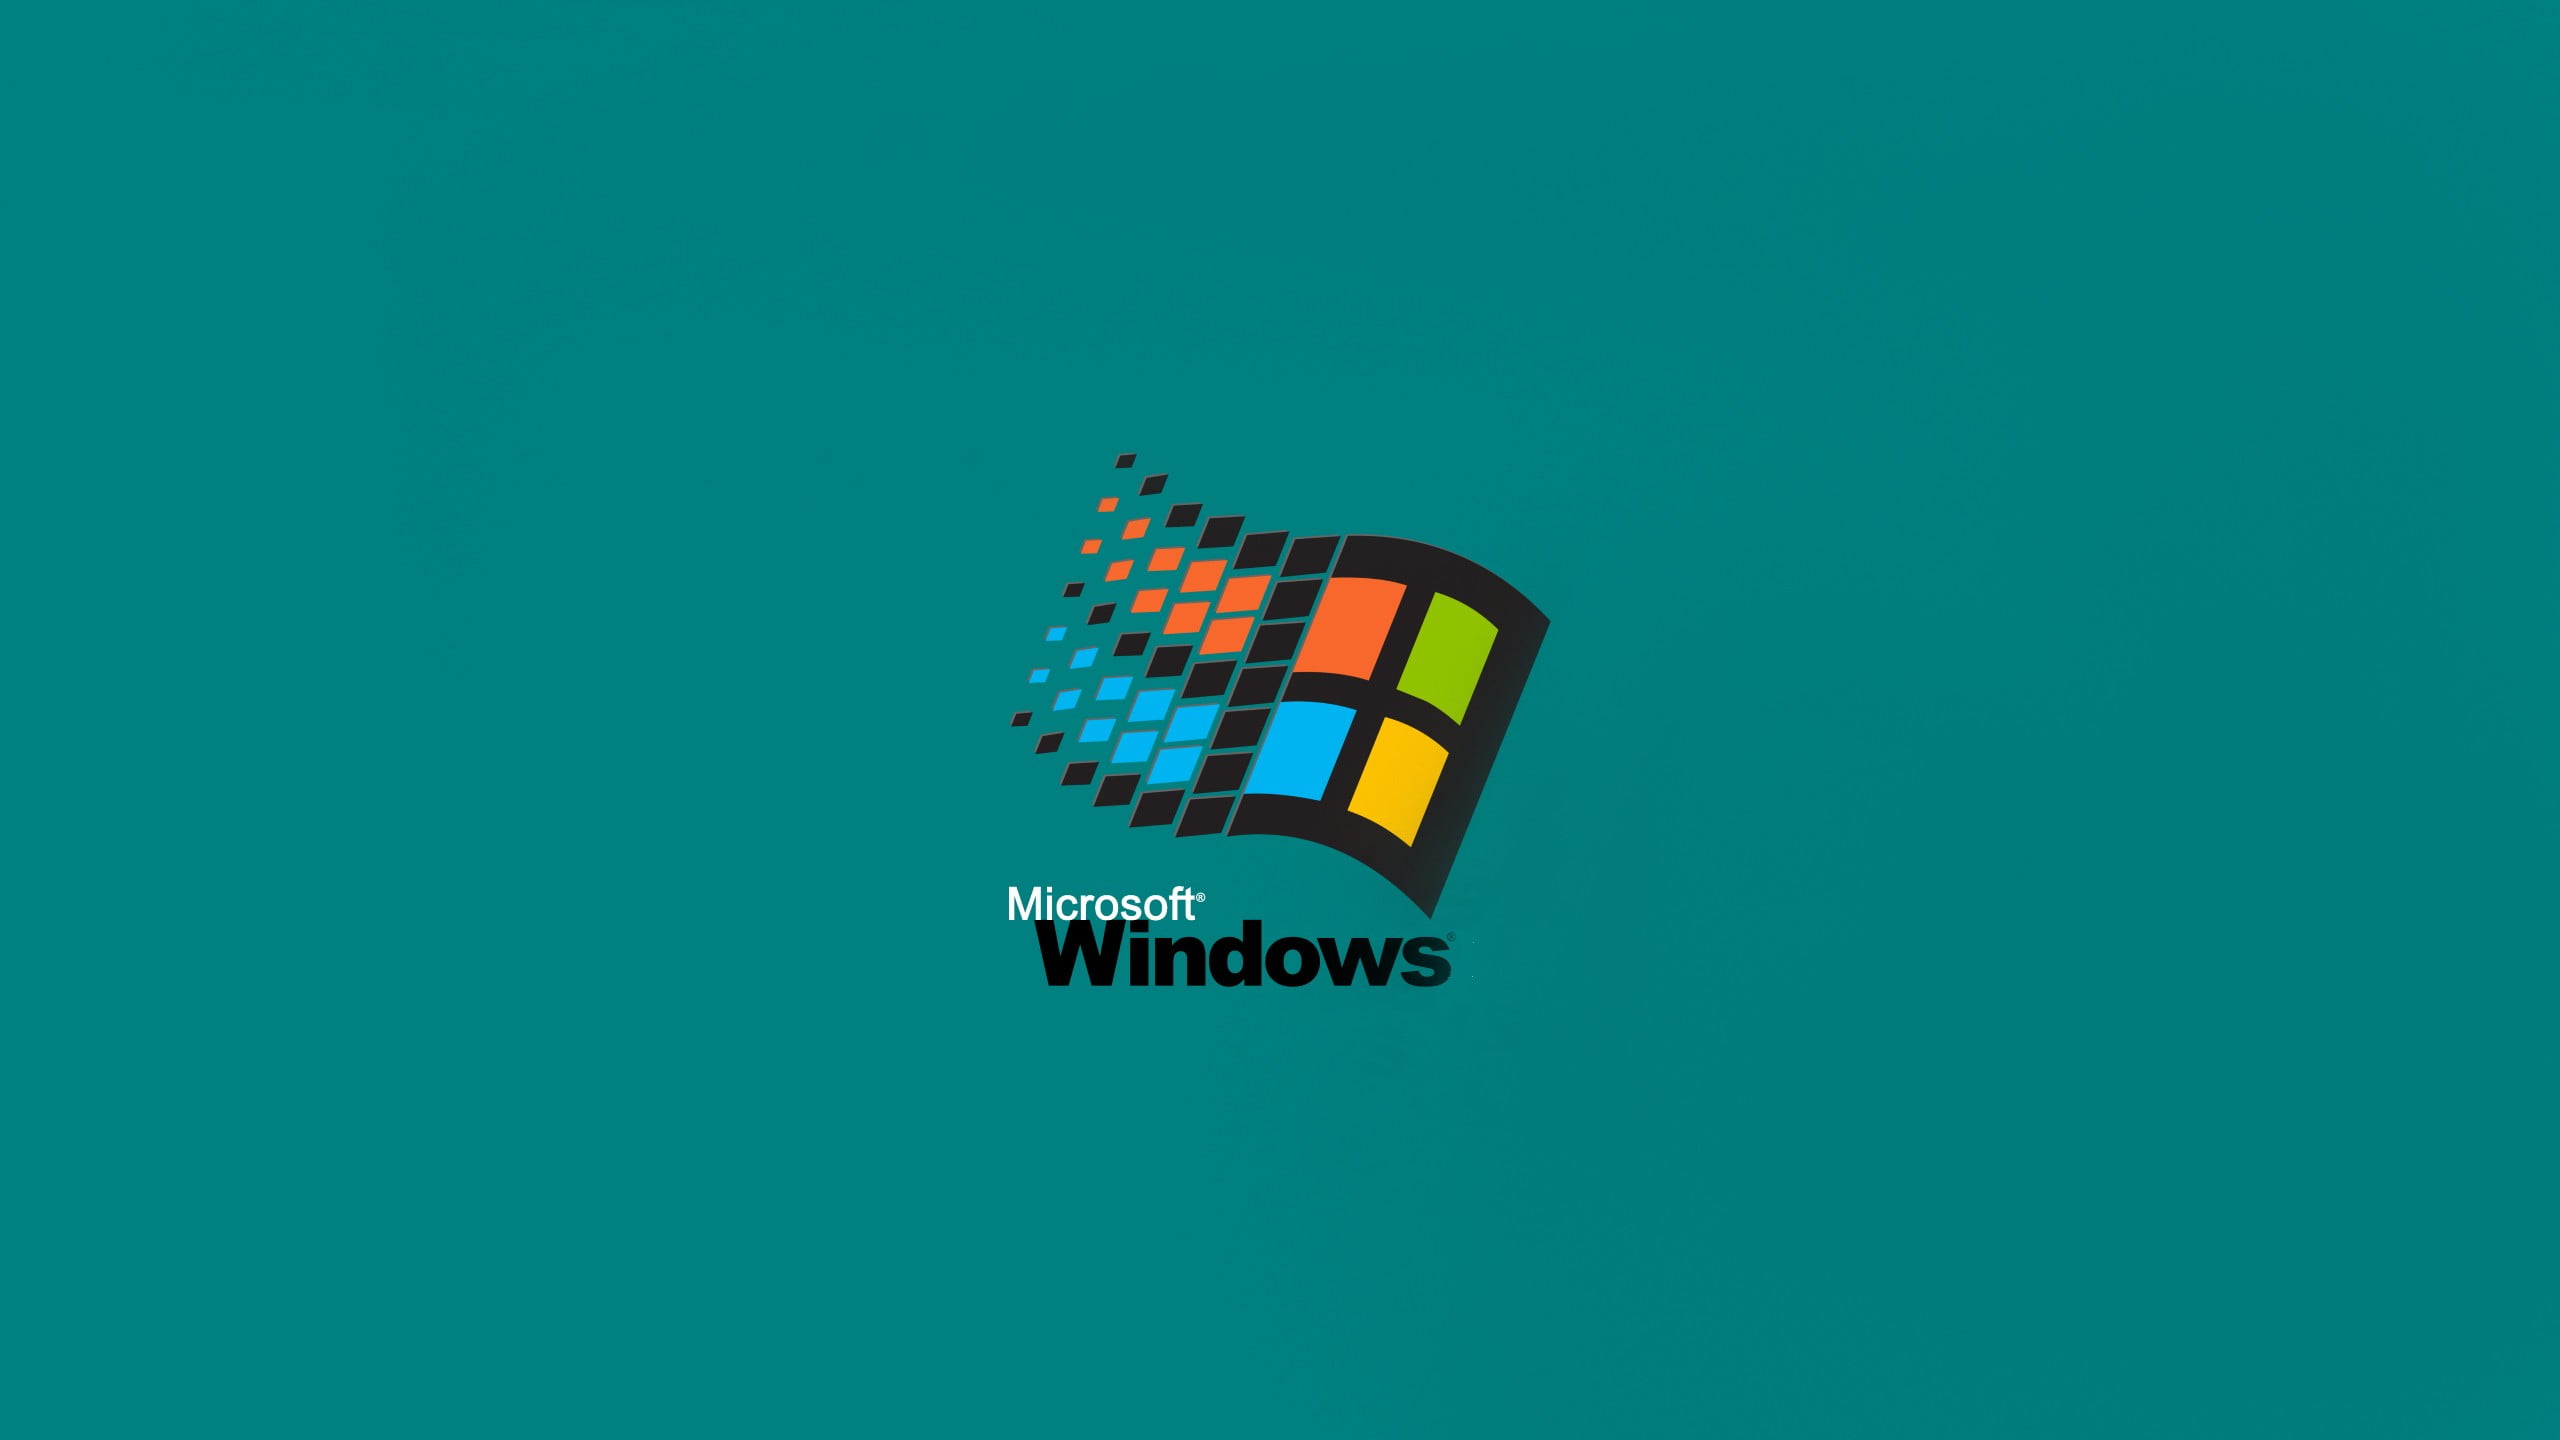 Microsoft 95, government, green color, microsoft windows, flag